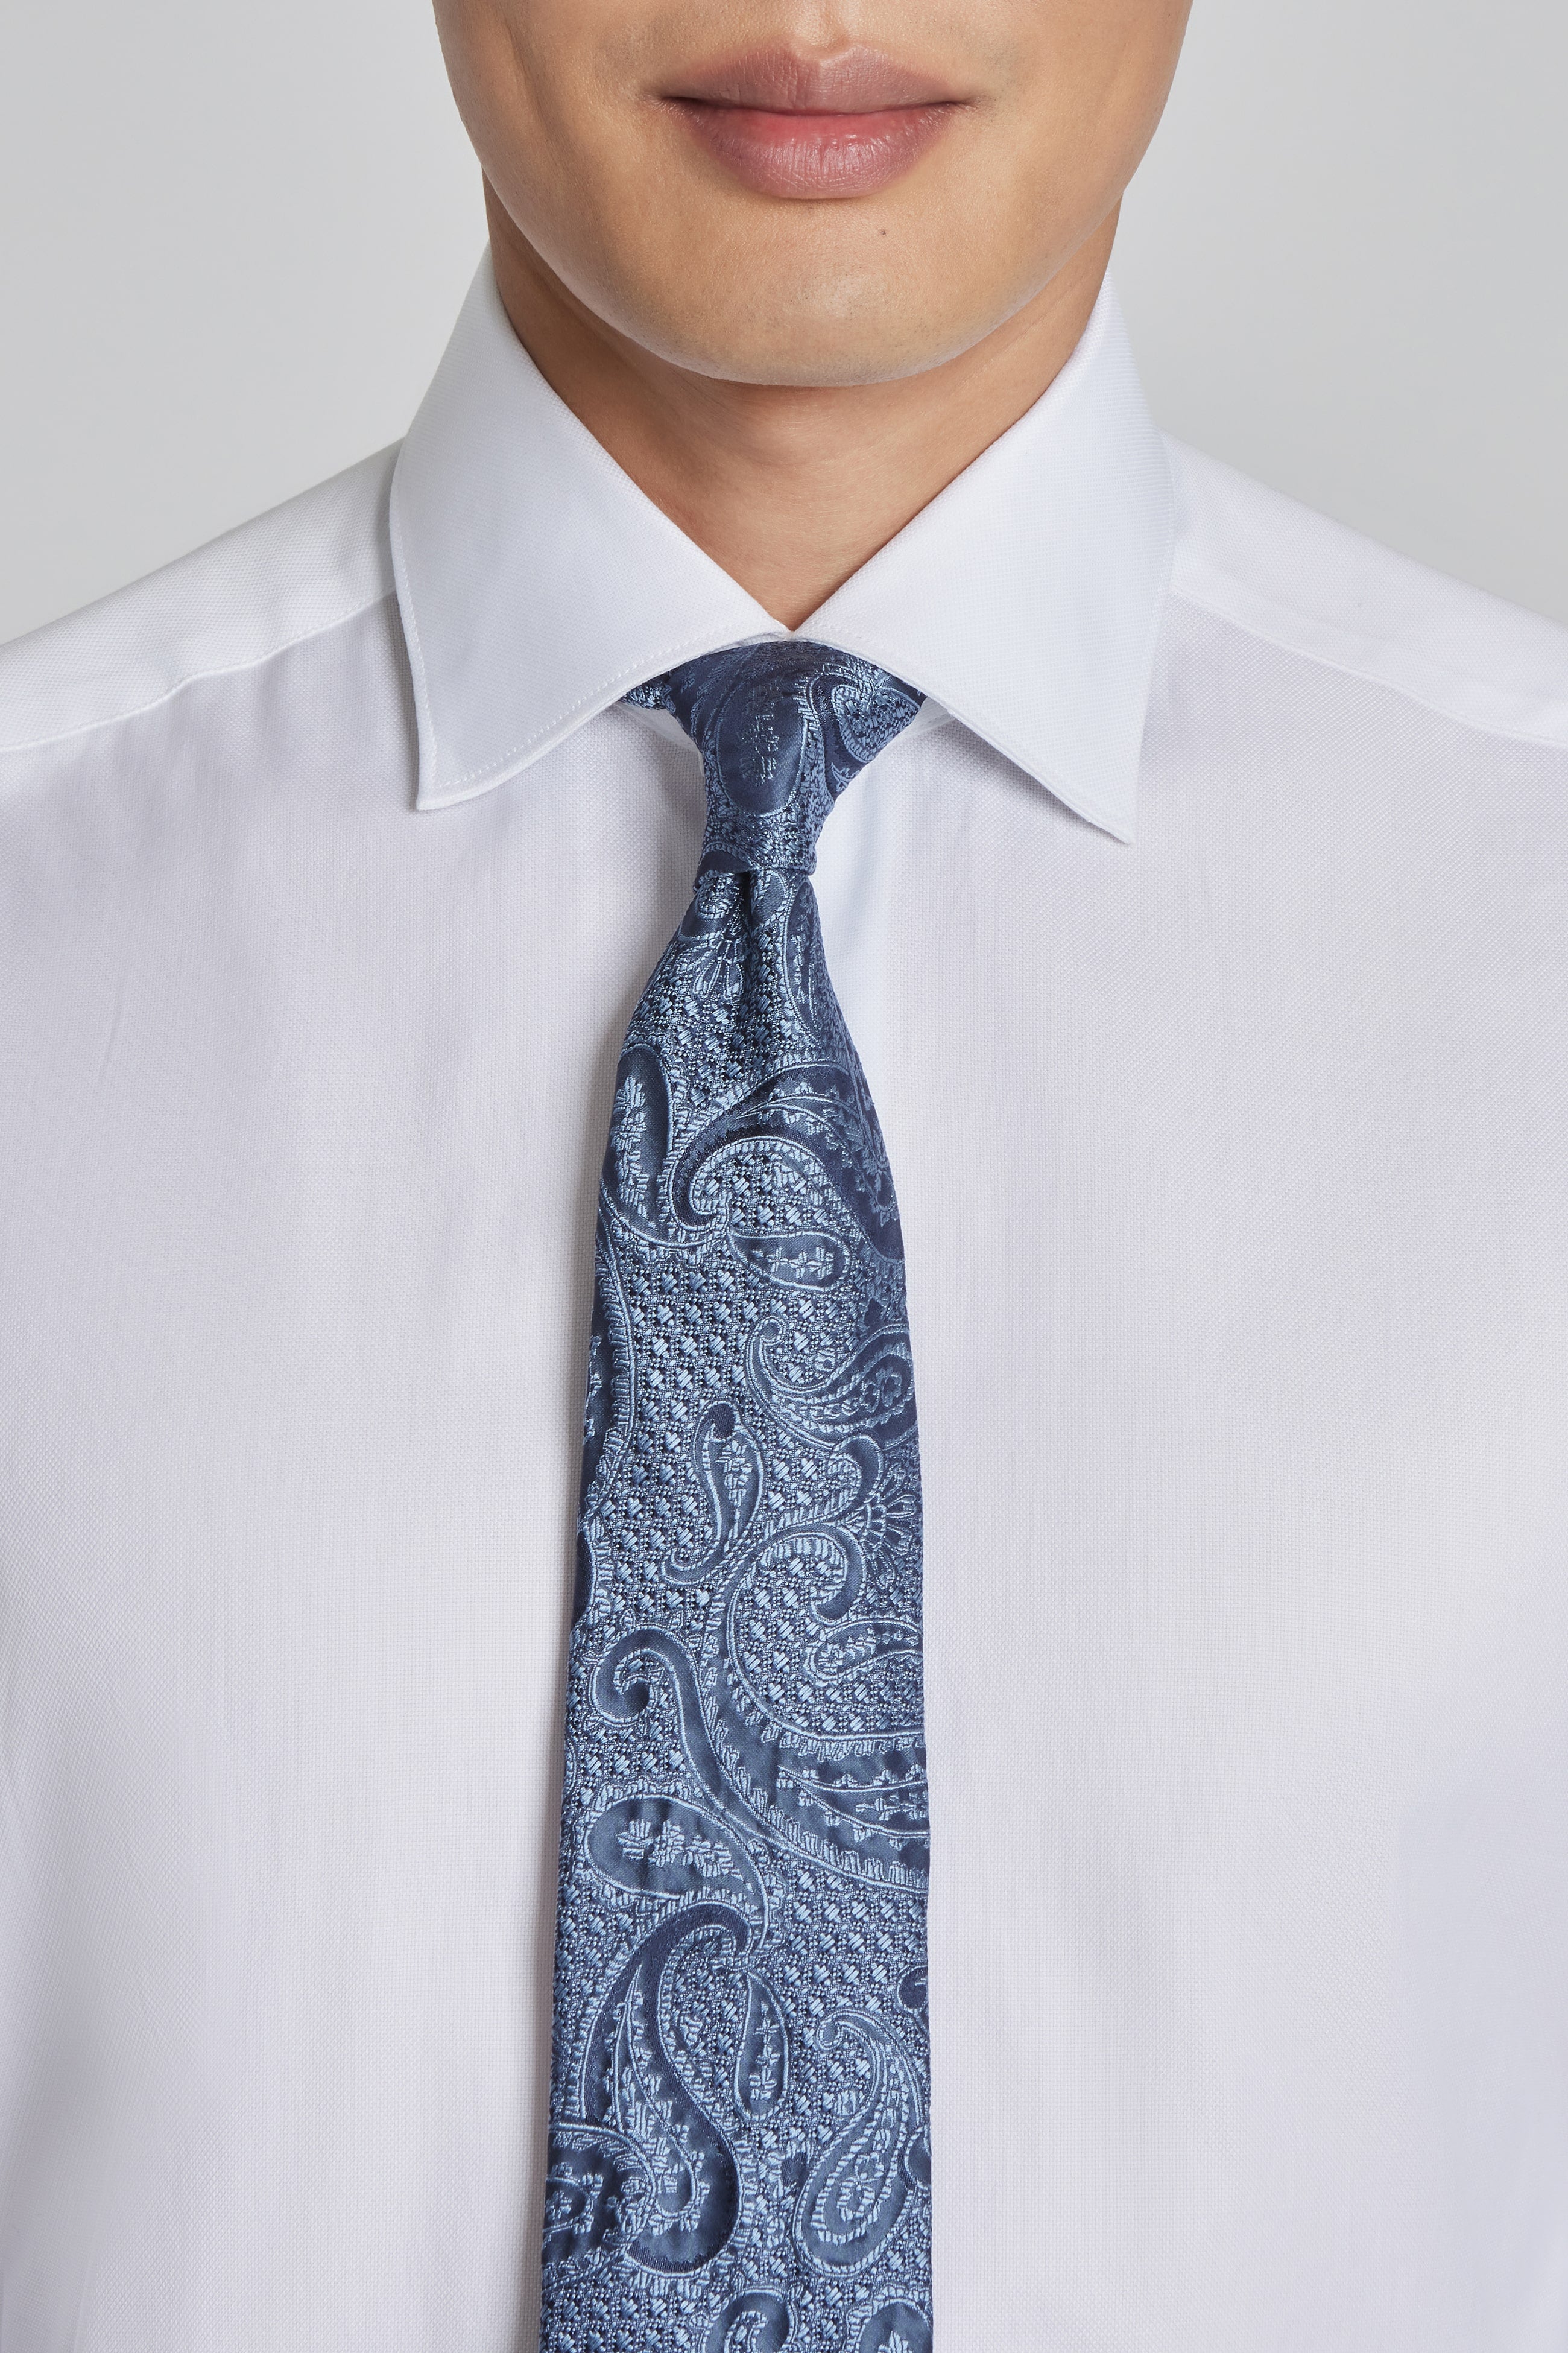 Vue alternative 2 Cravate Tissée Paisley Bleu